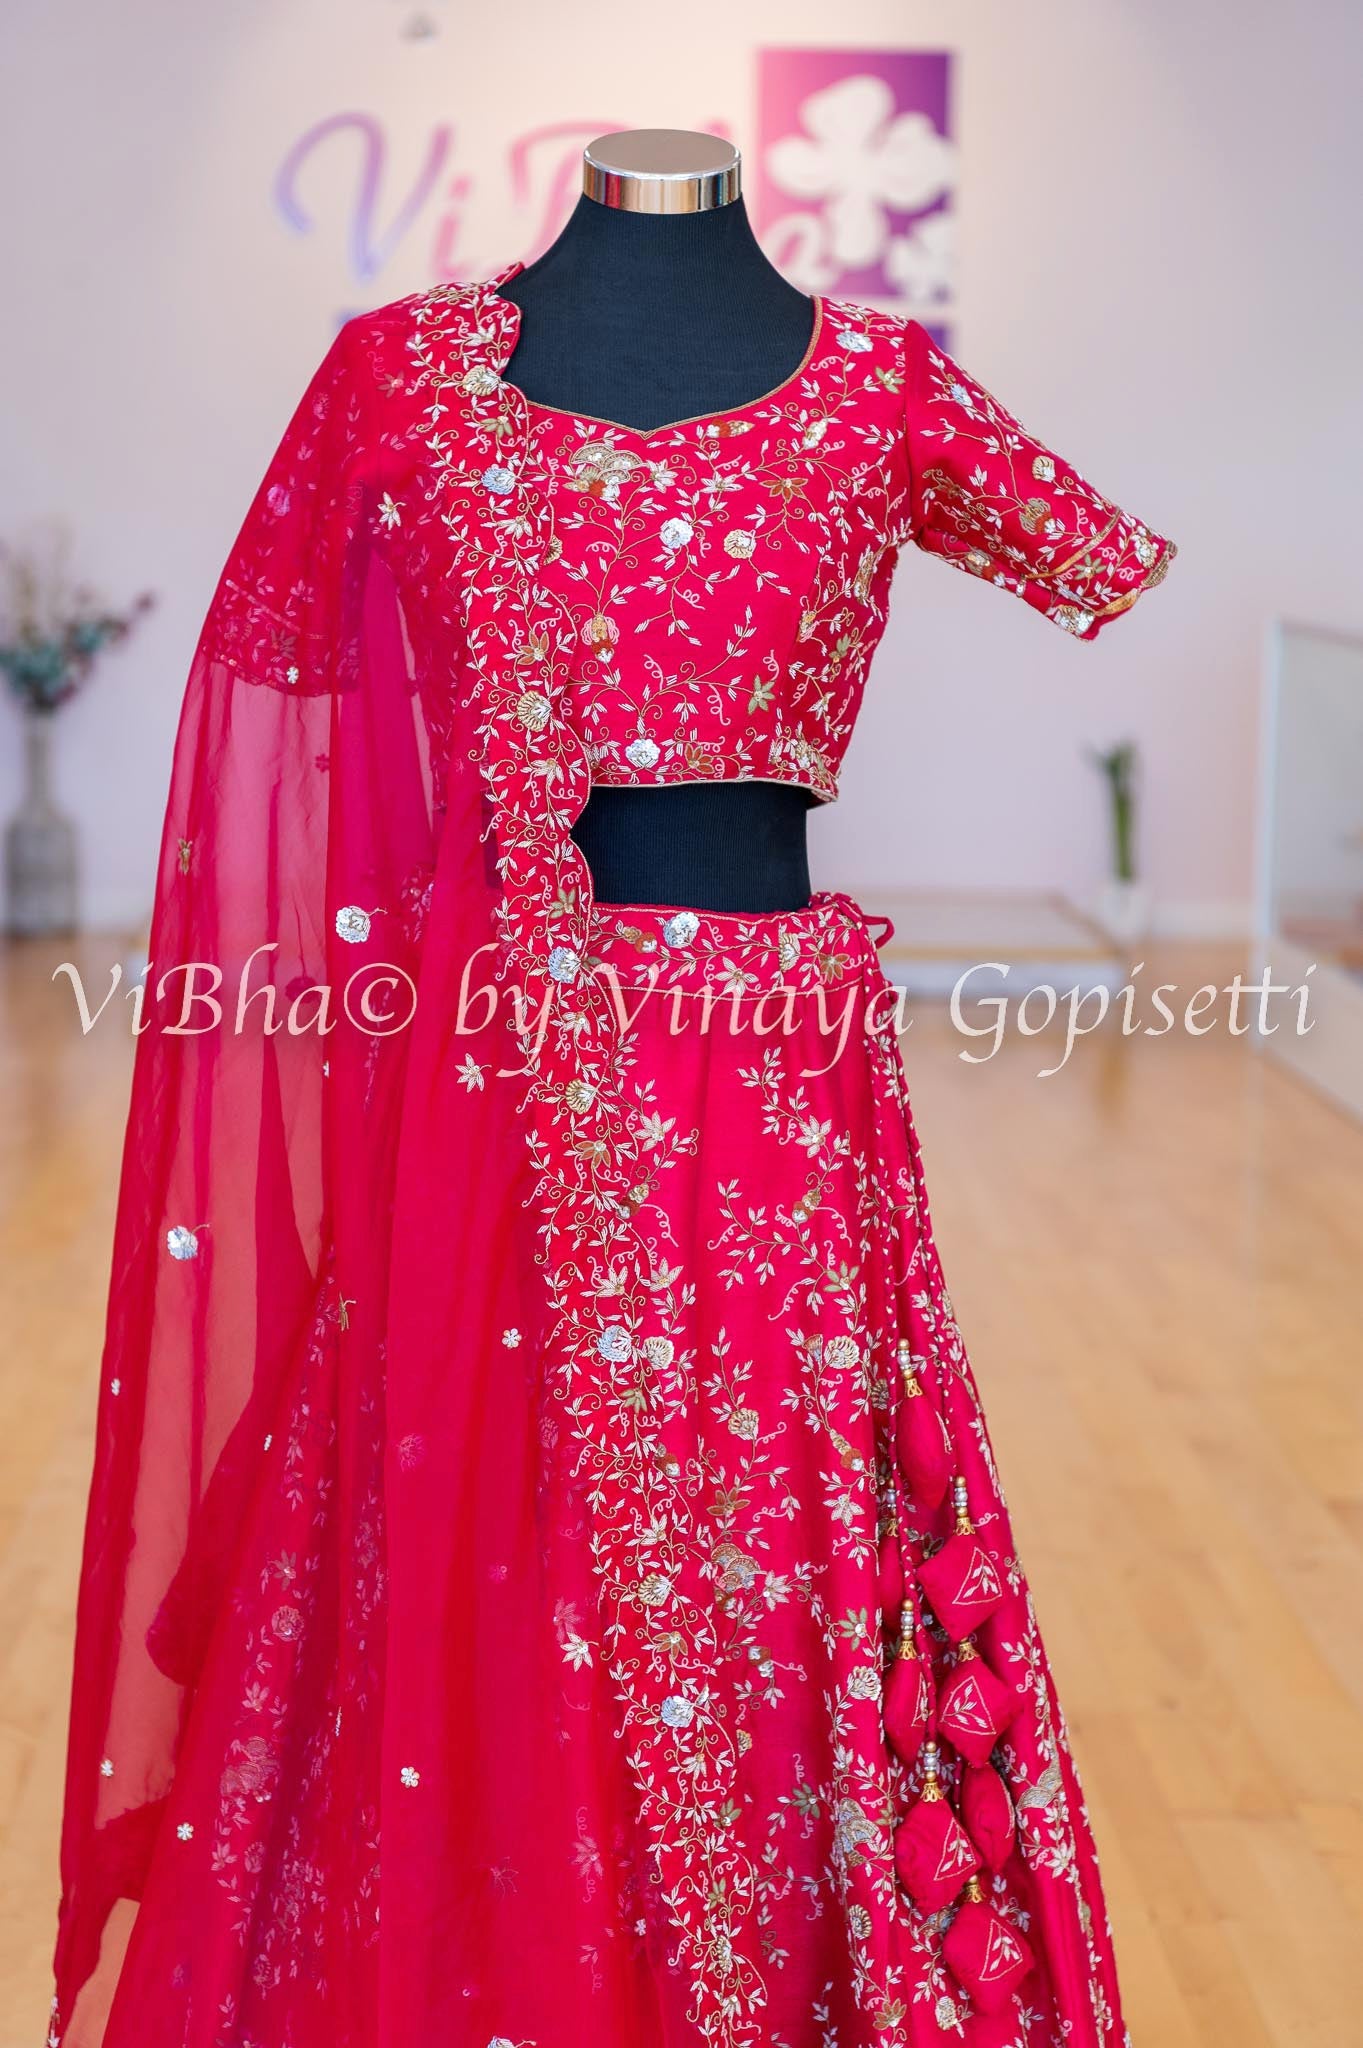 Bridal Lehenga Alternatives - Sarees, Anarkalis, Salwar Suits & More |  VOGUE India | Vogue India